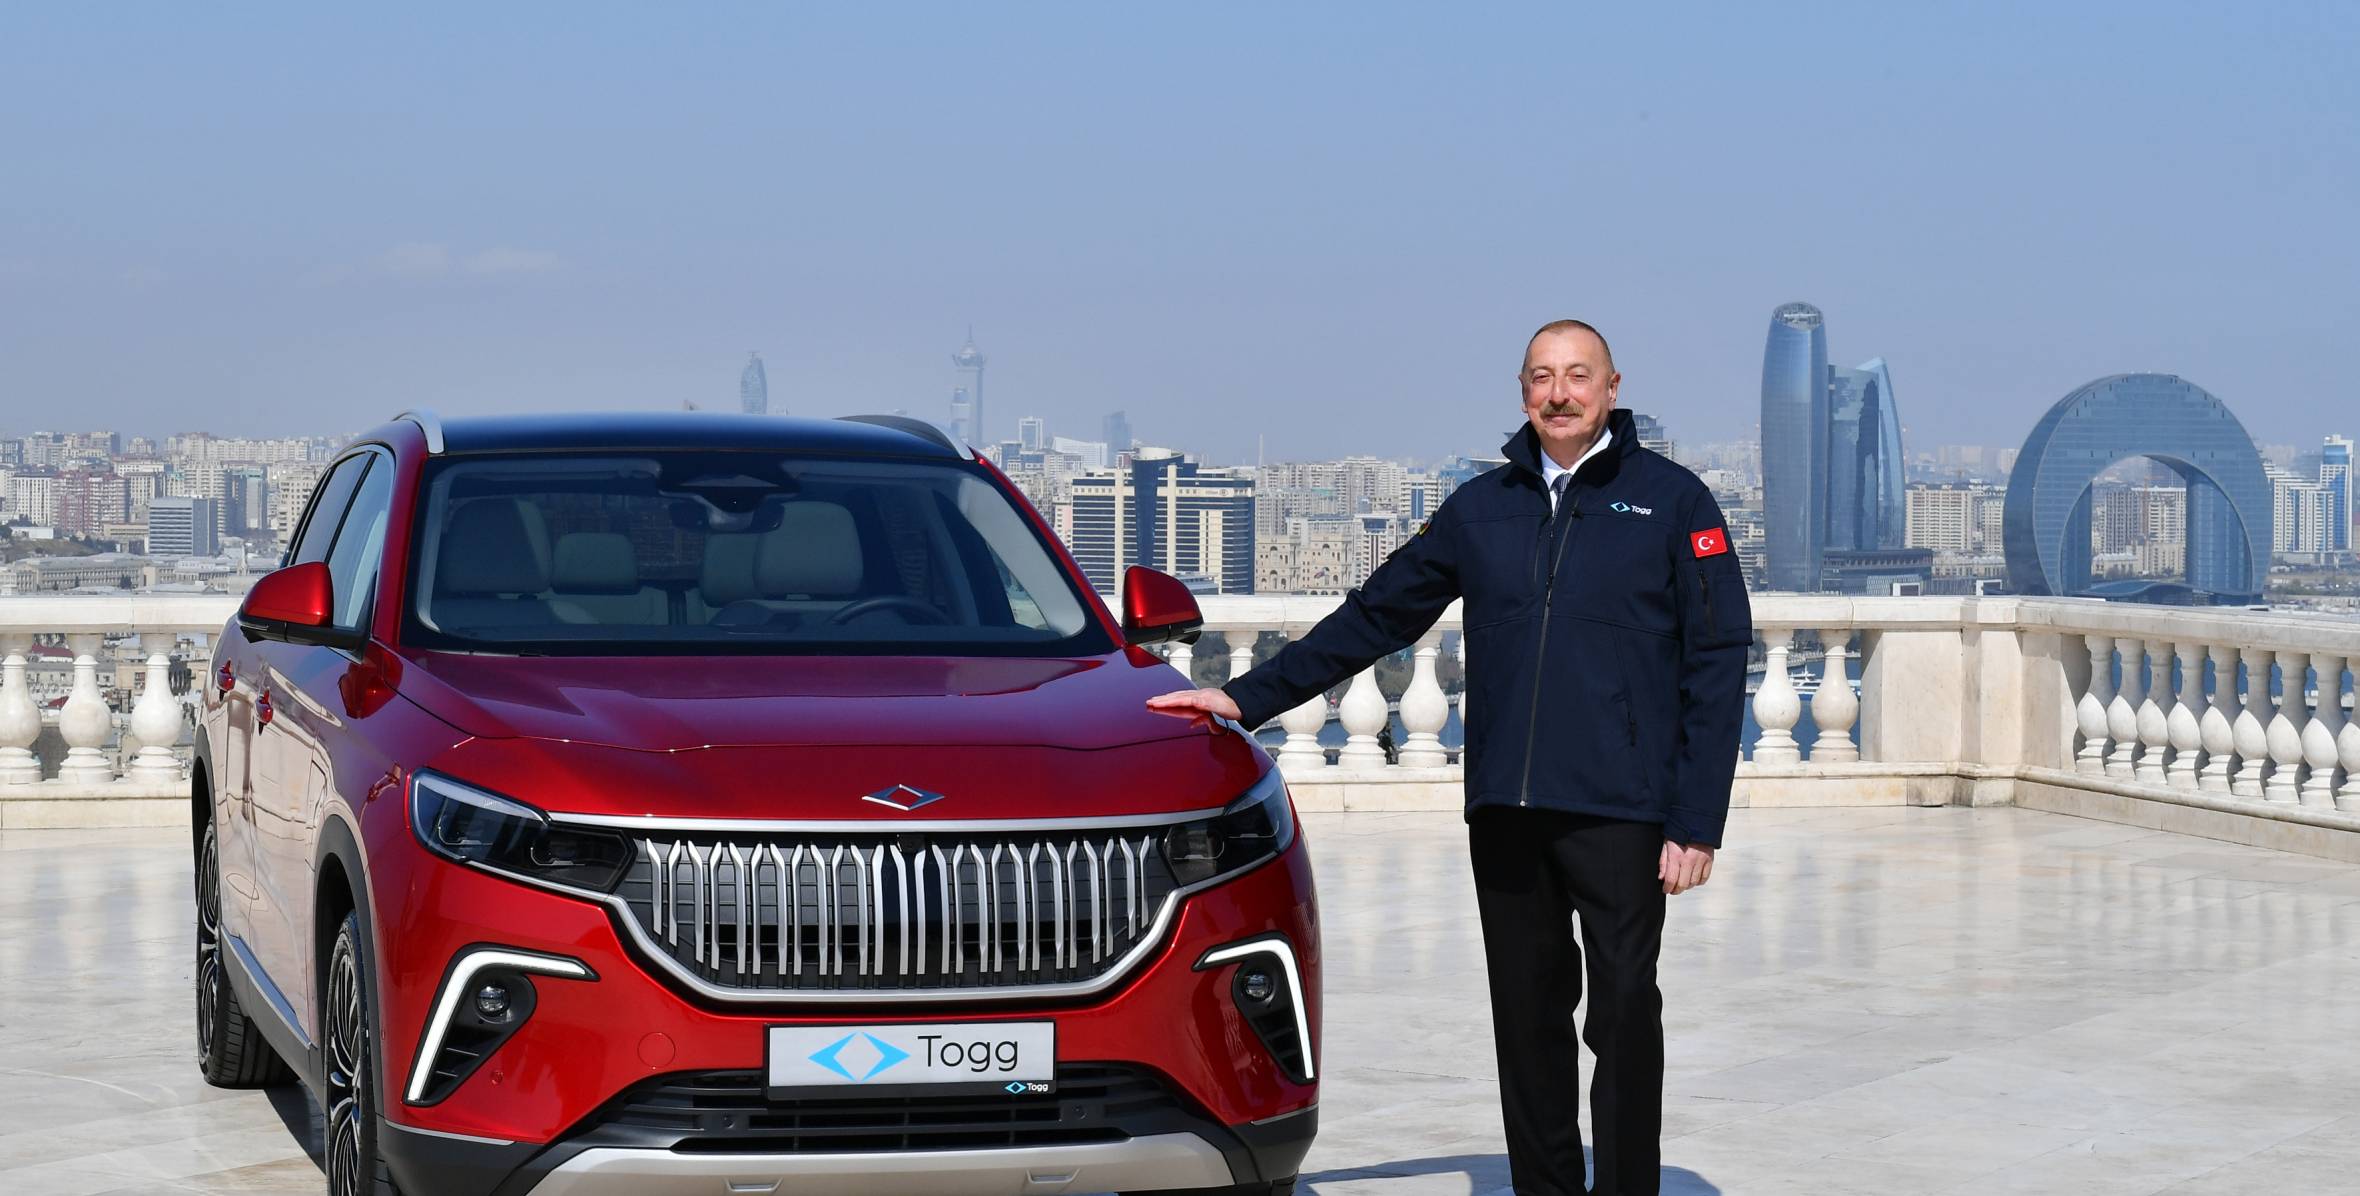 Türkiye’s first indigenous electric car Togg presented to Ilham Aliyev